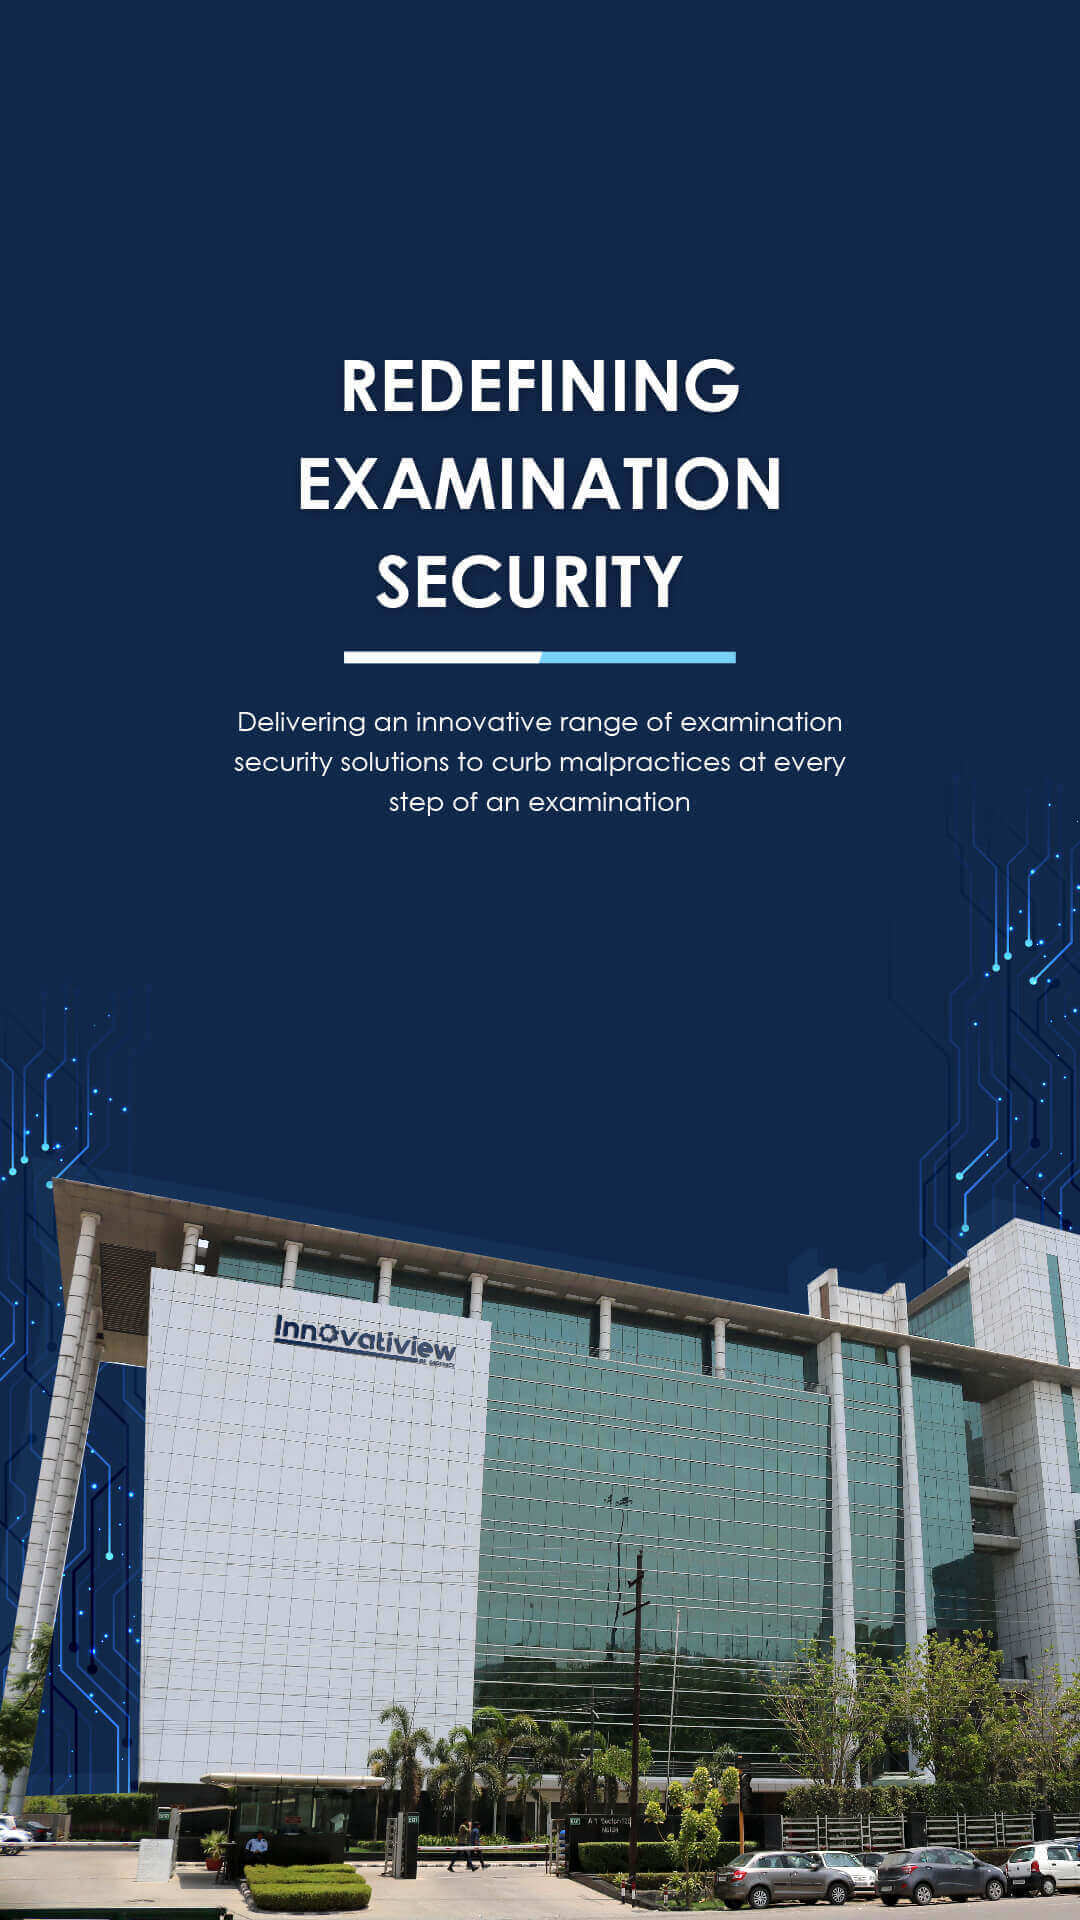 Examination security